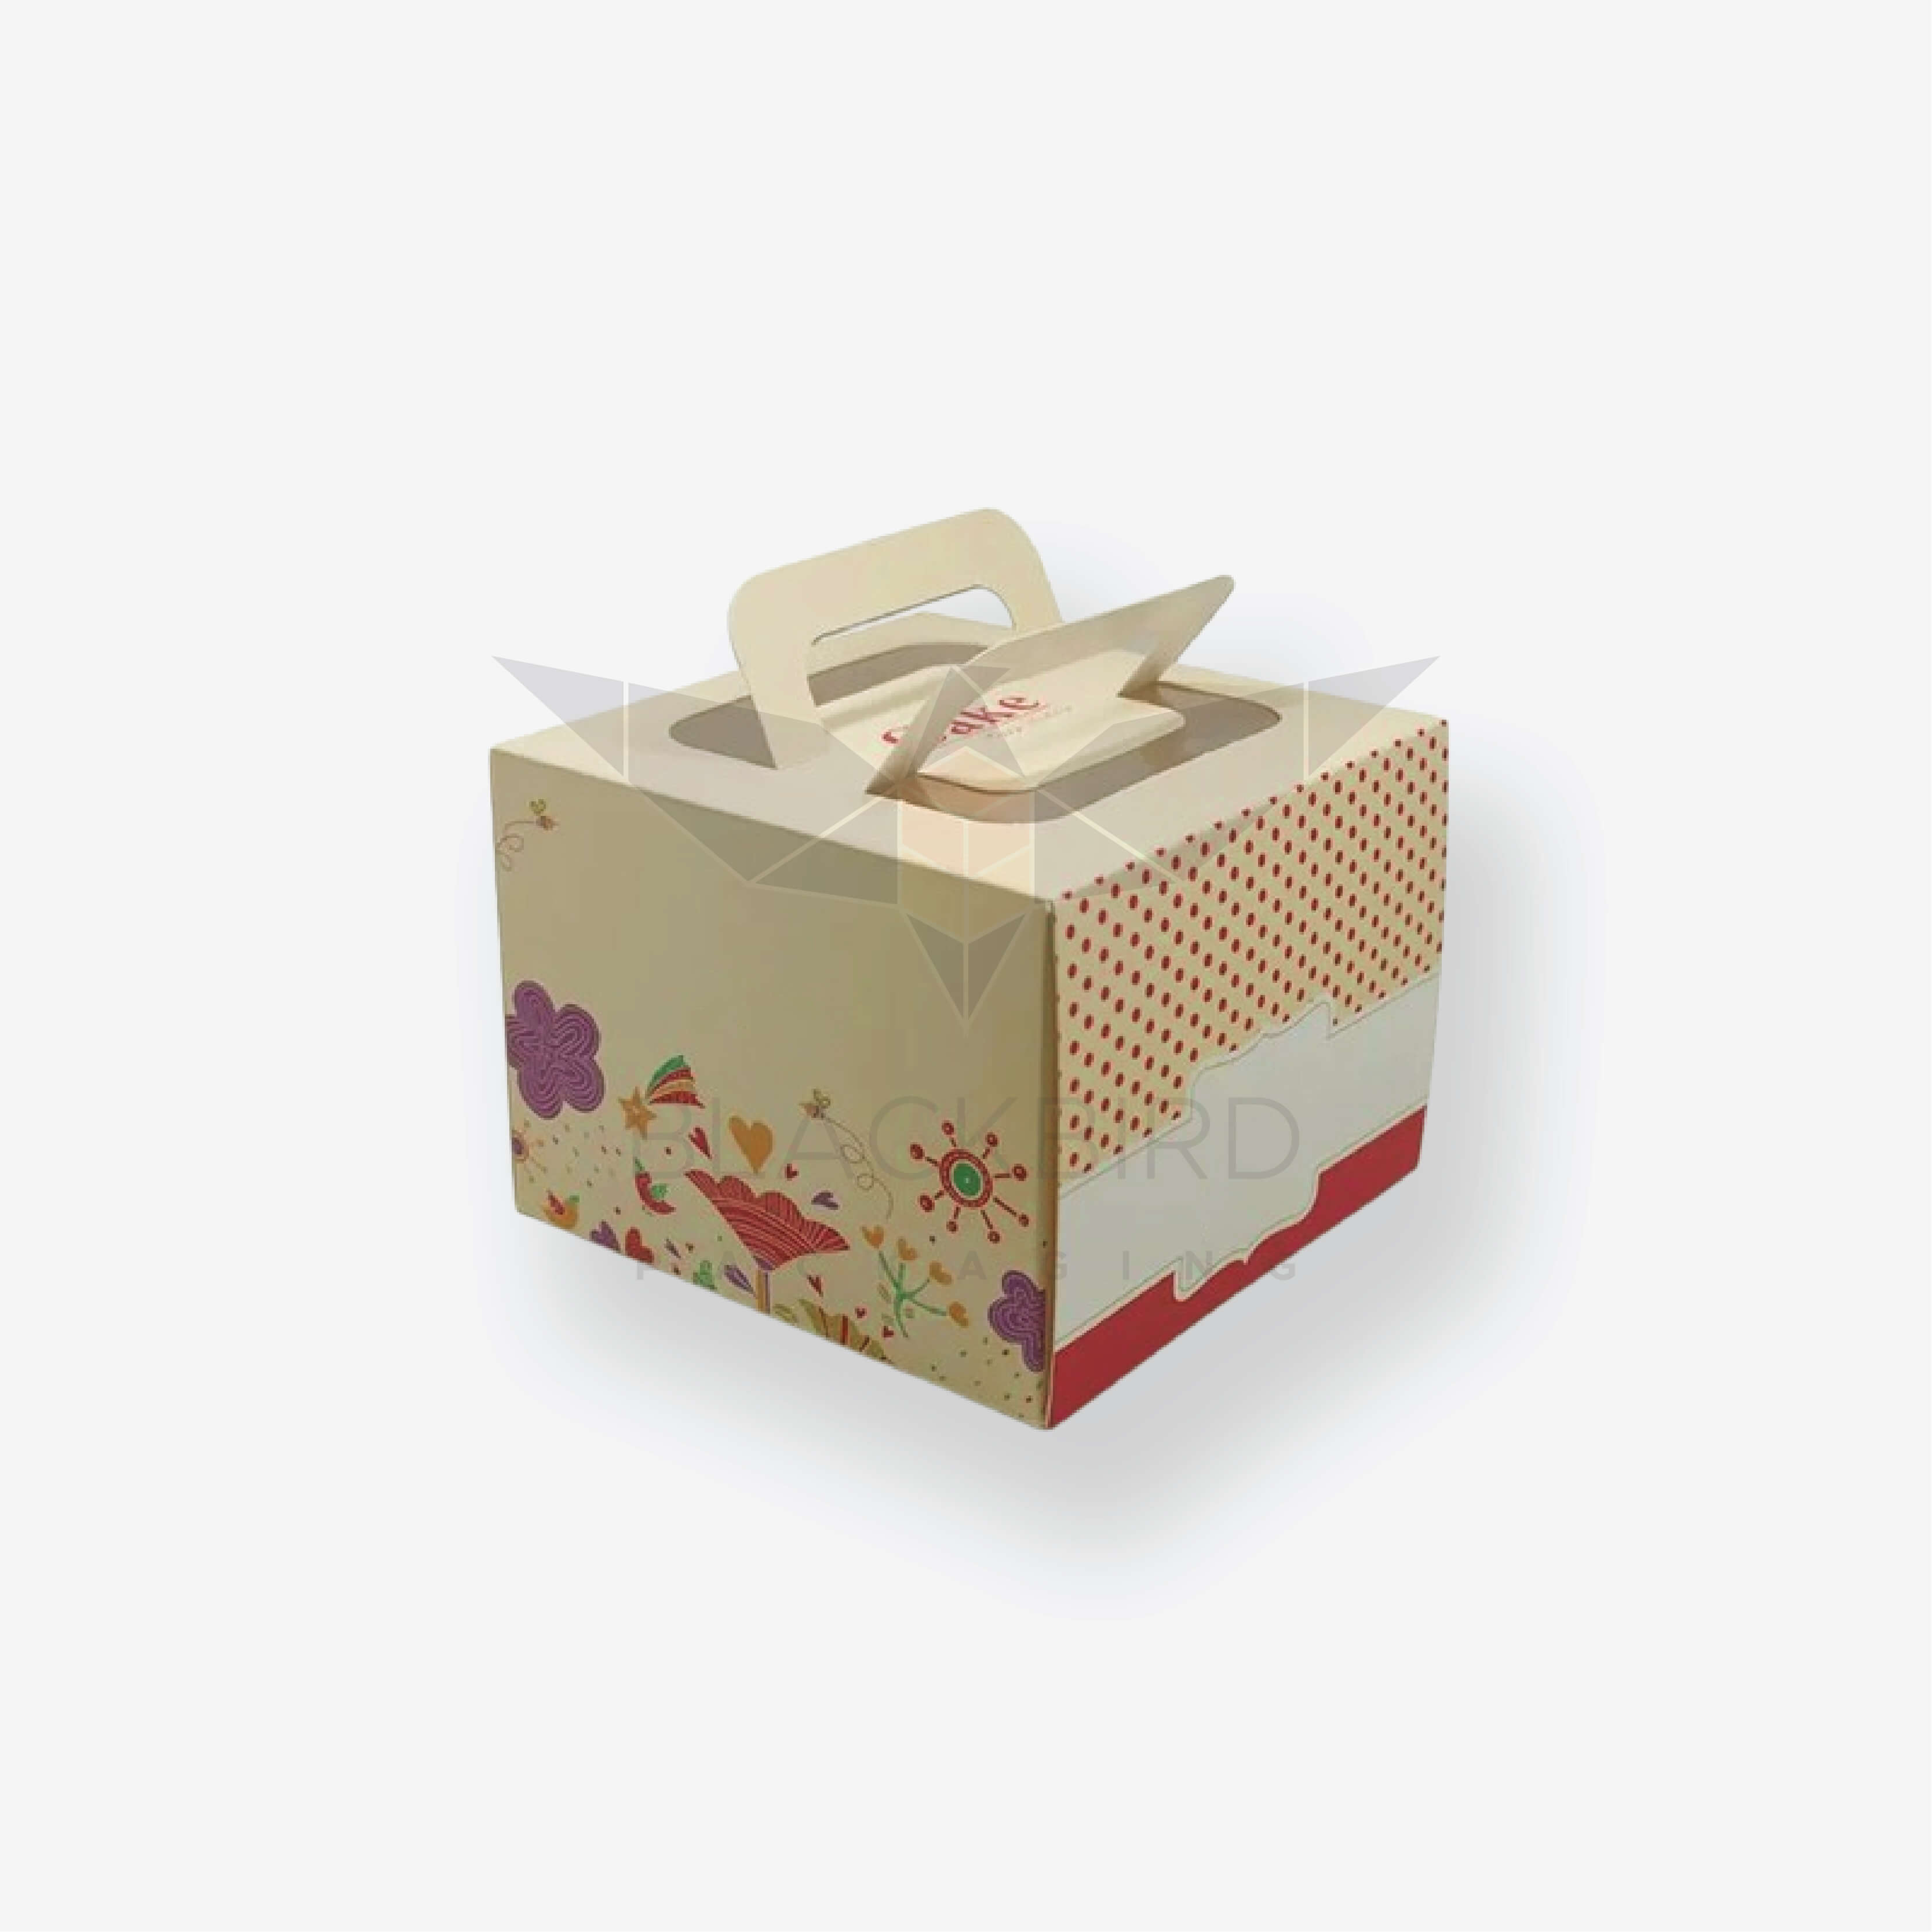 Custom Printed Bakery Boxes